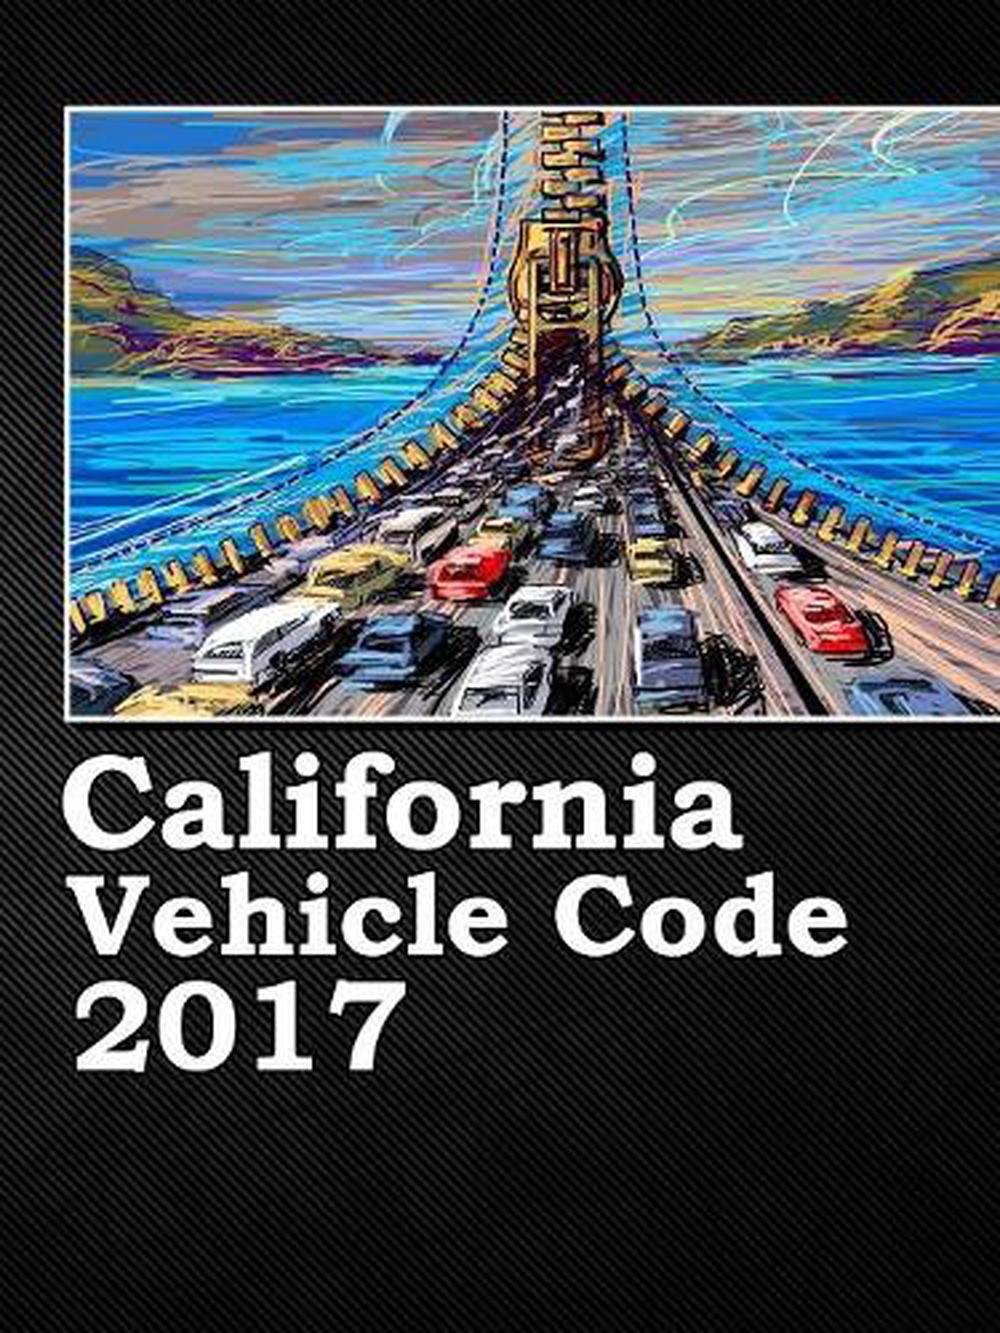 California Vehicle Code 2017 by John Snape (English) Paperback Book